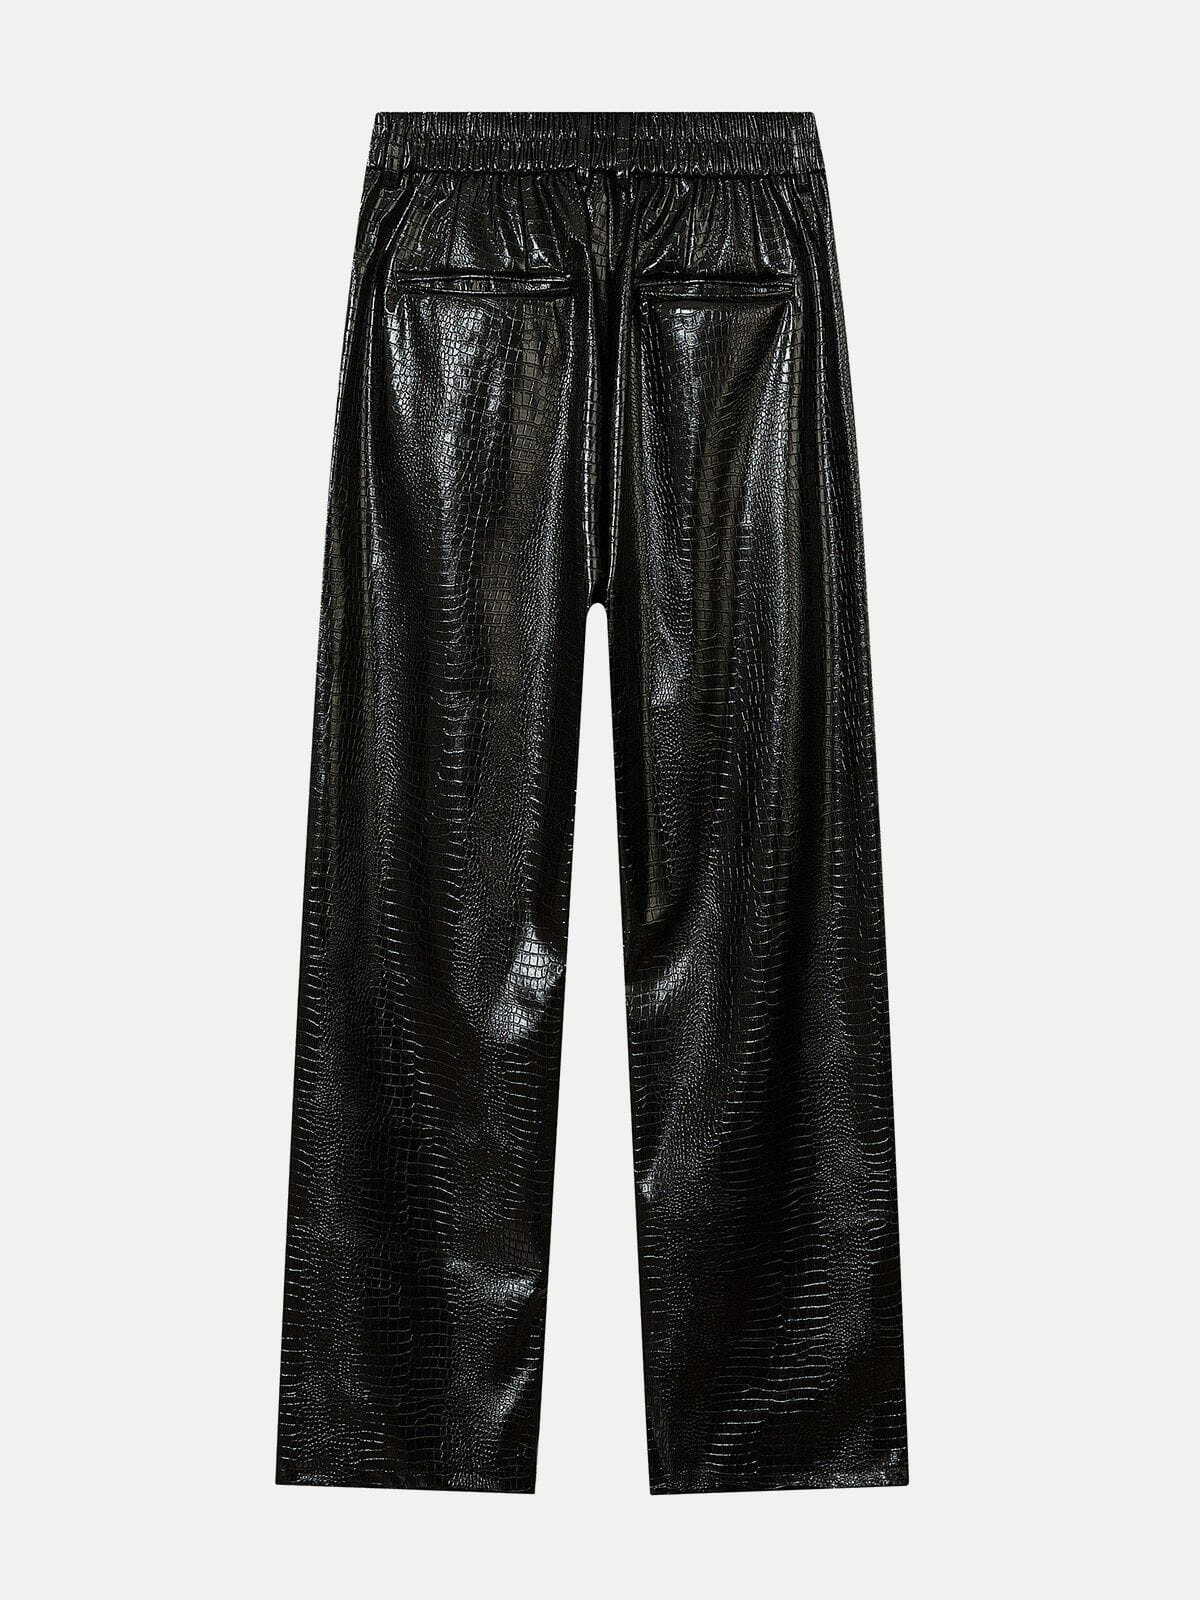 sleek leather pants edgy & stylish streetwear 6222